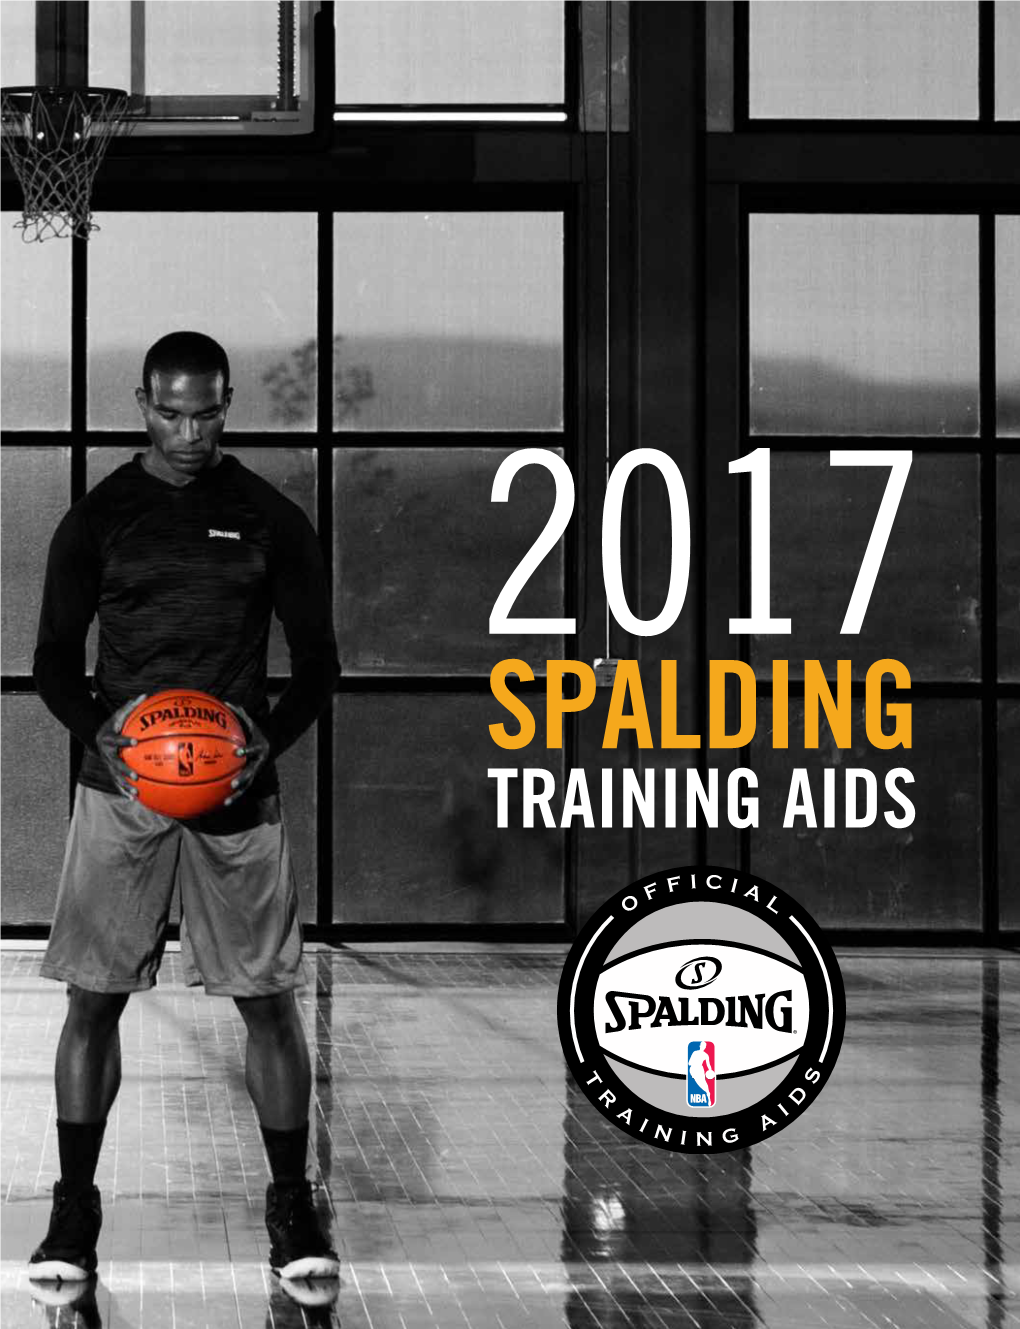 SPALDING TRAINING AIDS Training Areas